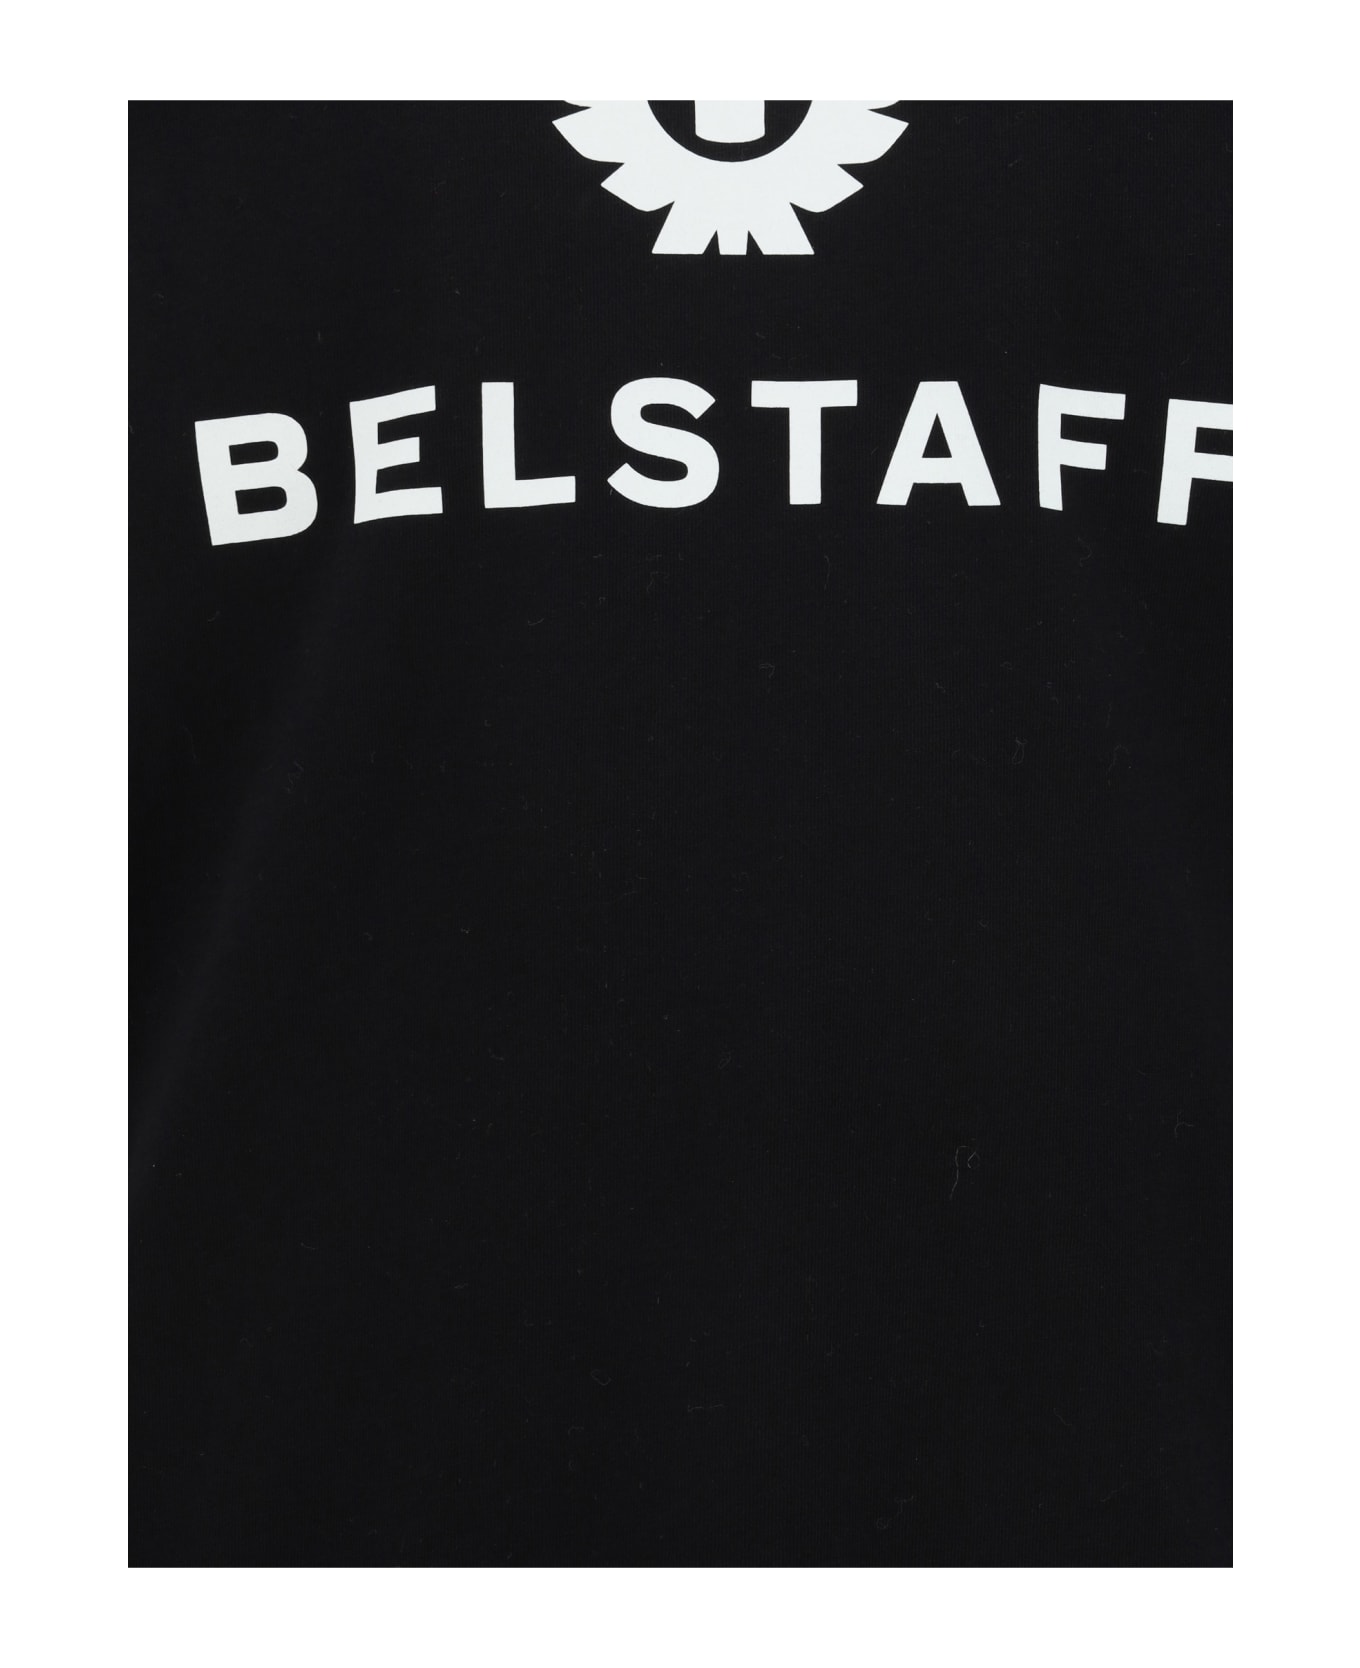 Belstaff Signature T-shirt - Black